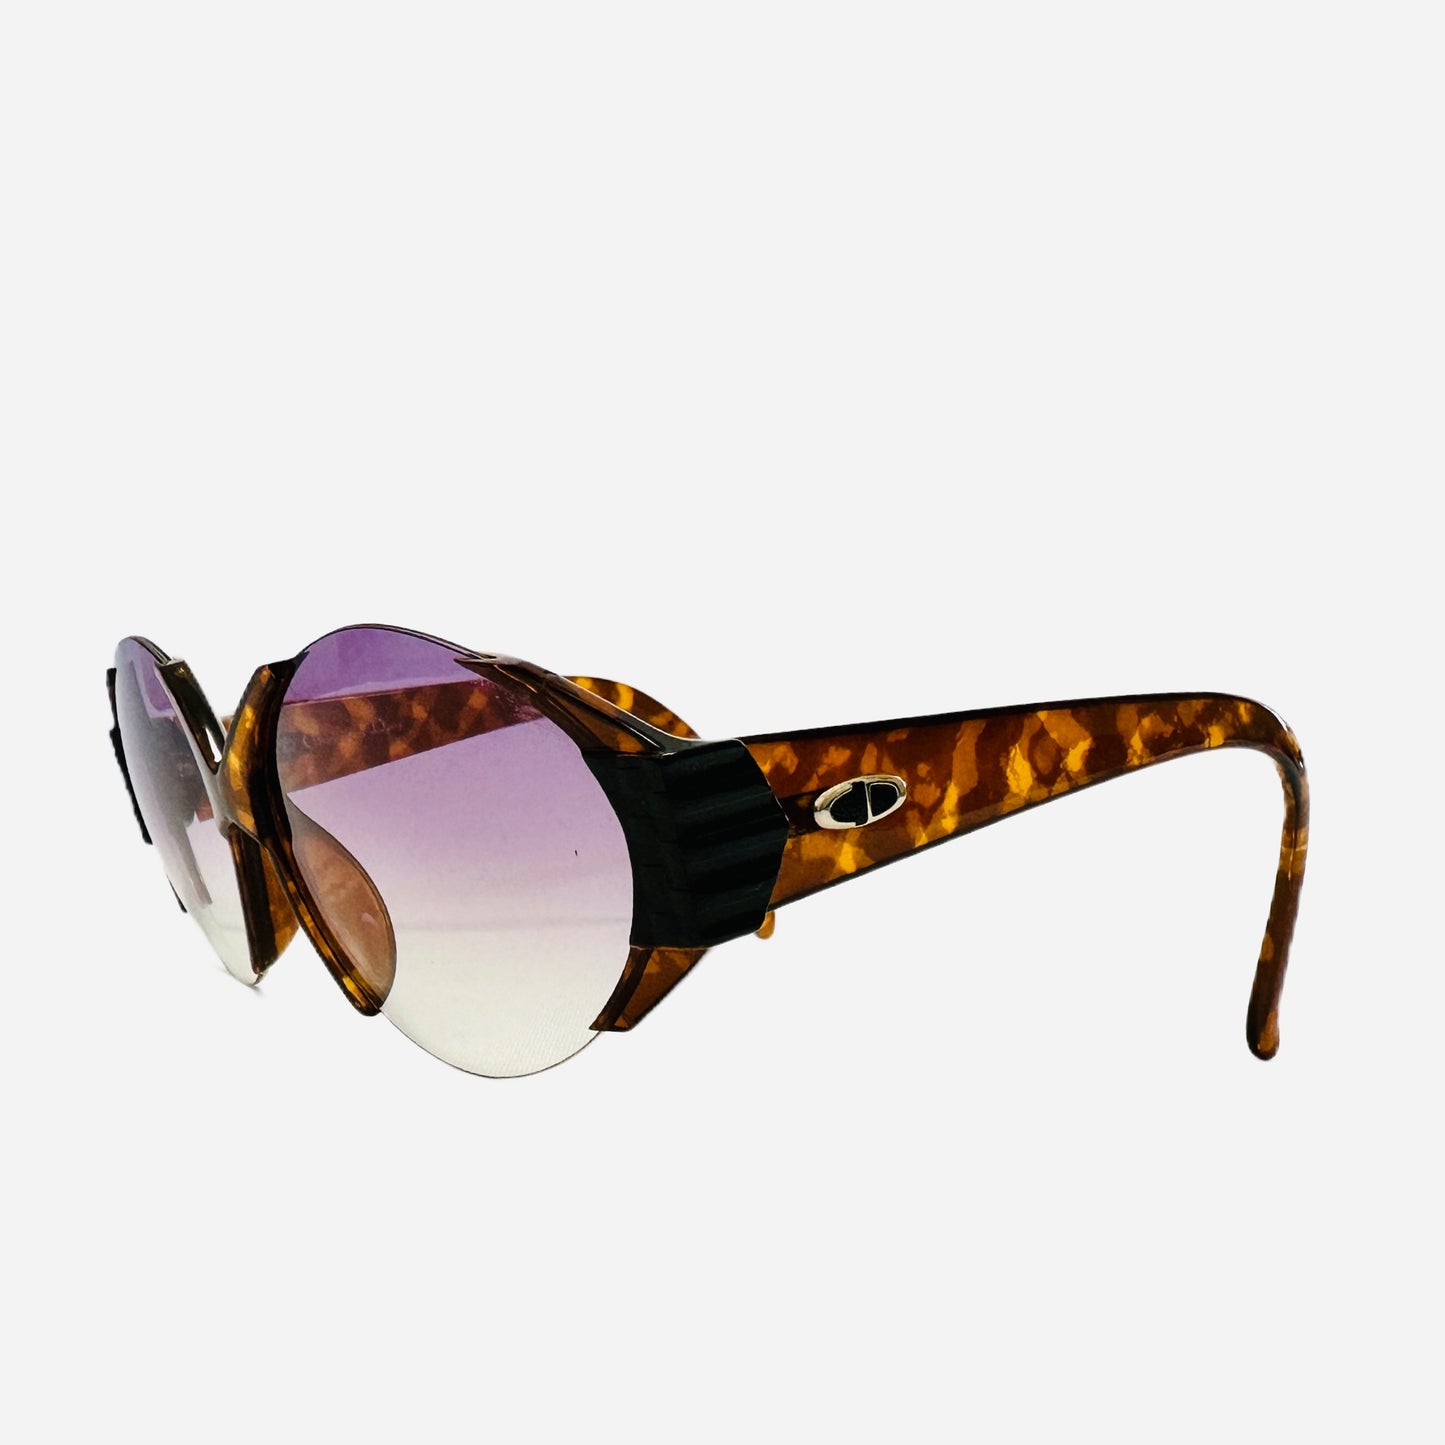 Vintage-Christian-Dior-Sonnenbrille-Sonnenbrille-2397-Verlauf-Gradient-the-seekers-sunglasses-front